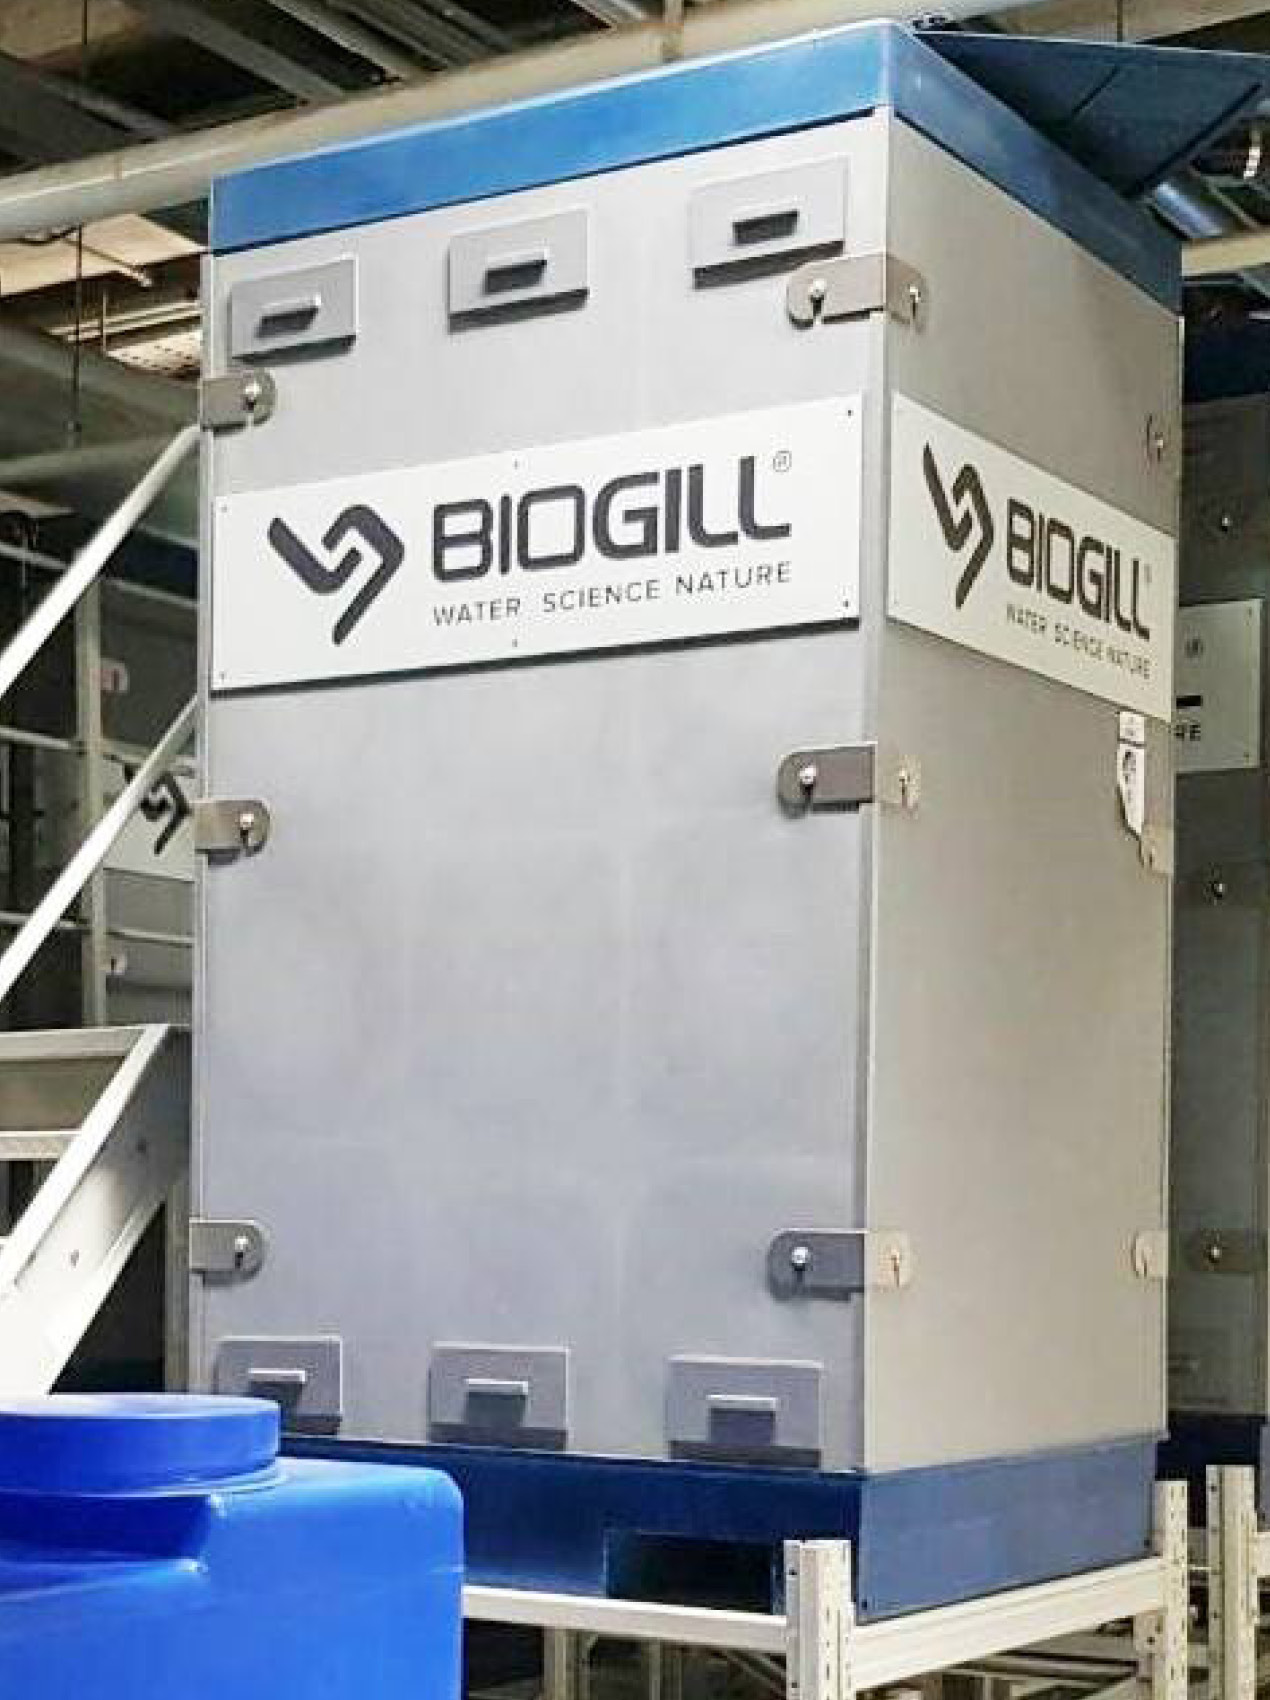 Biogill towers